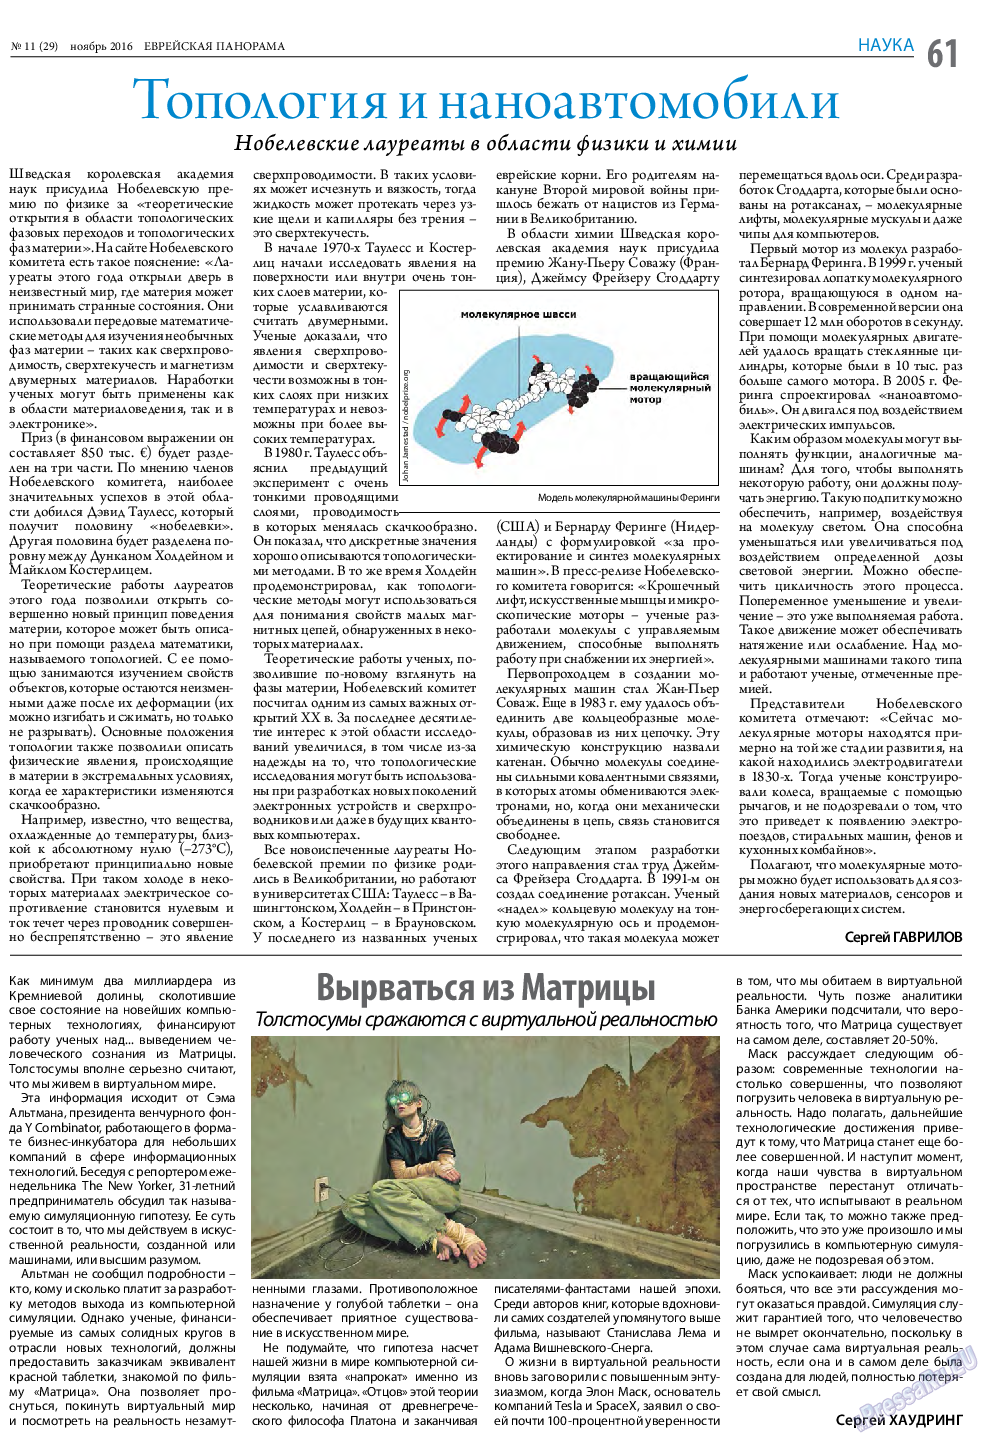 Еврейская панорама, газета. 2016 №11 стр.61